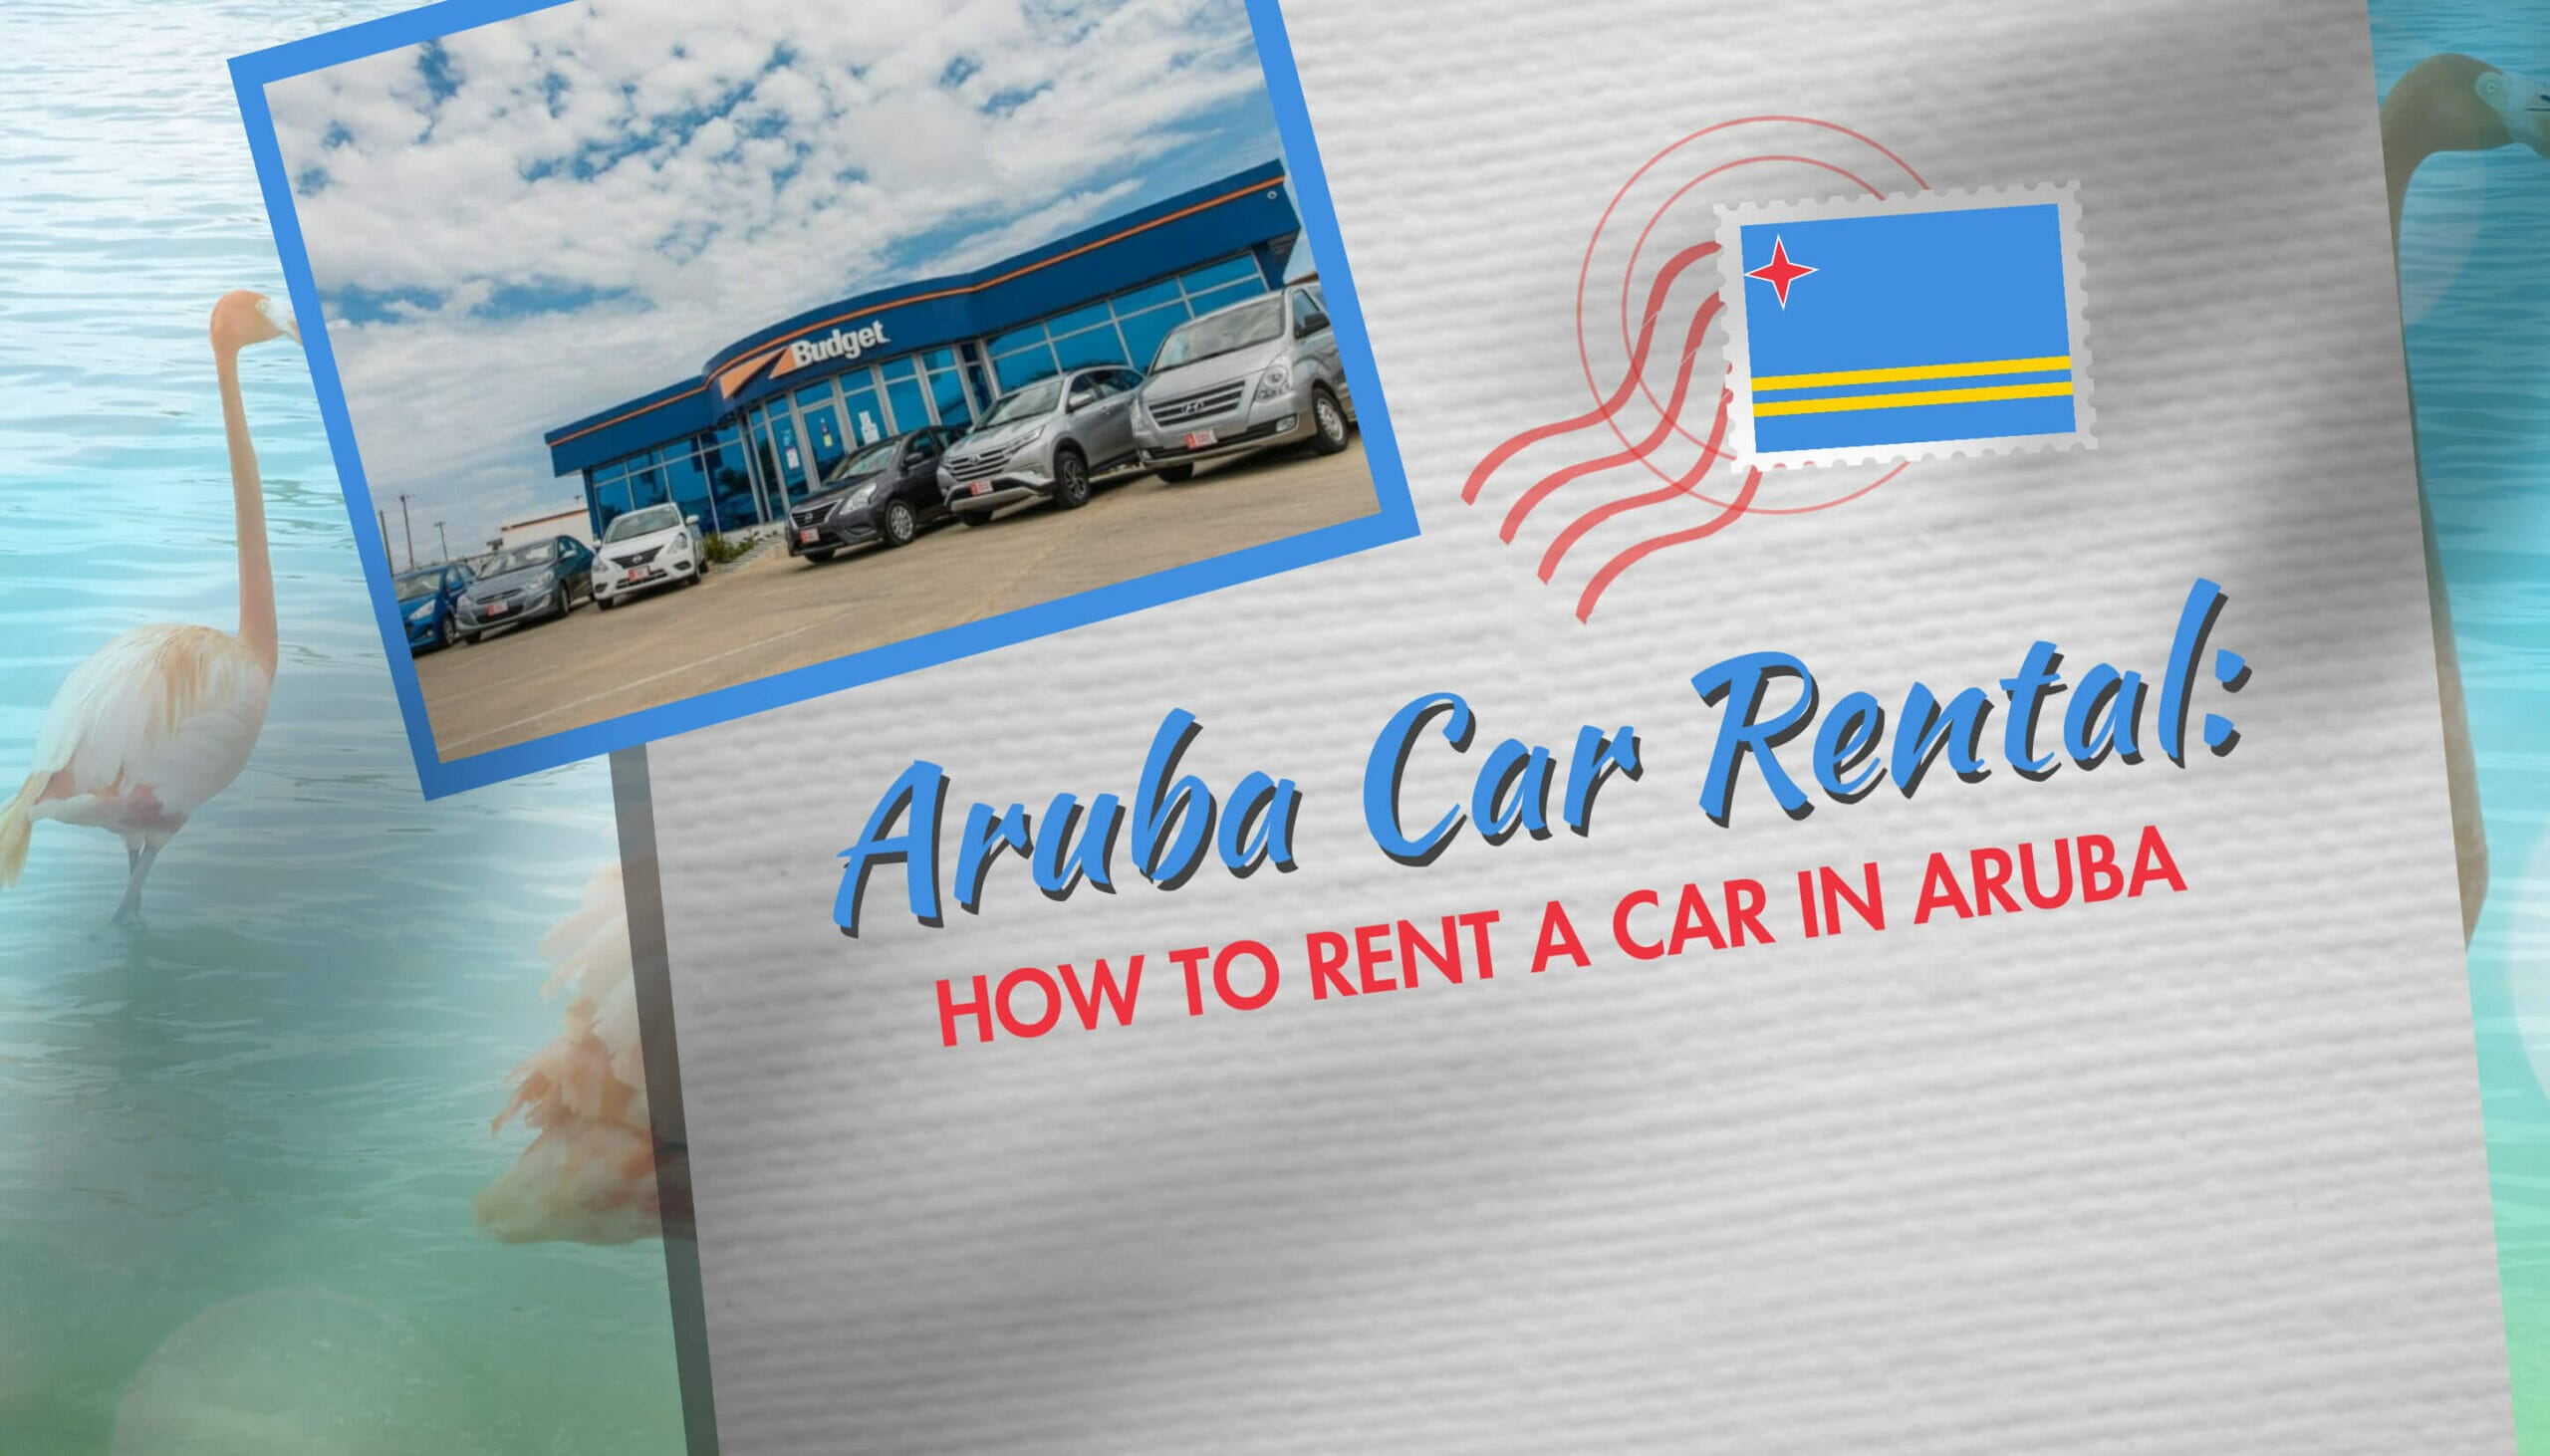 Aruba Car Rental How To Rent A Car In Aruba Scaled 